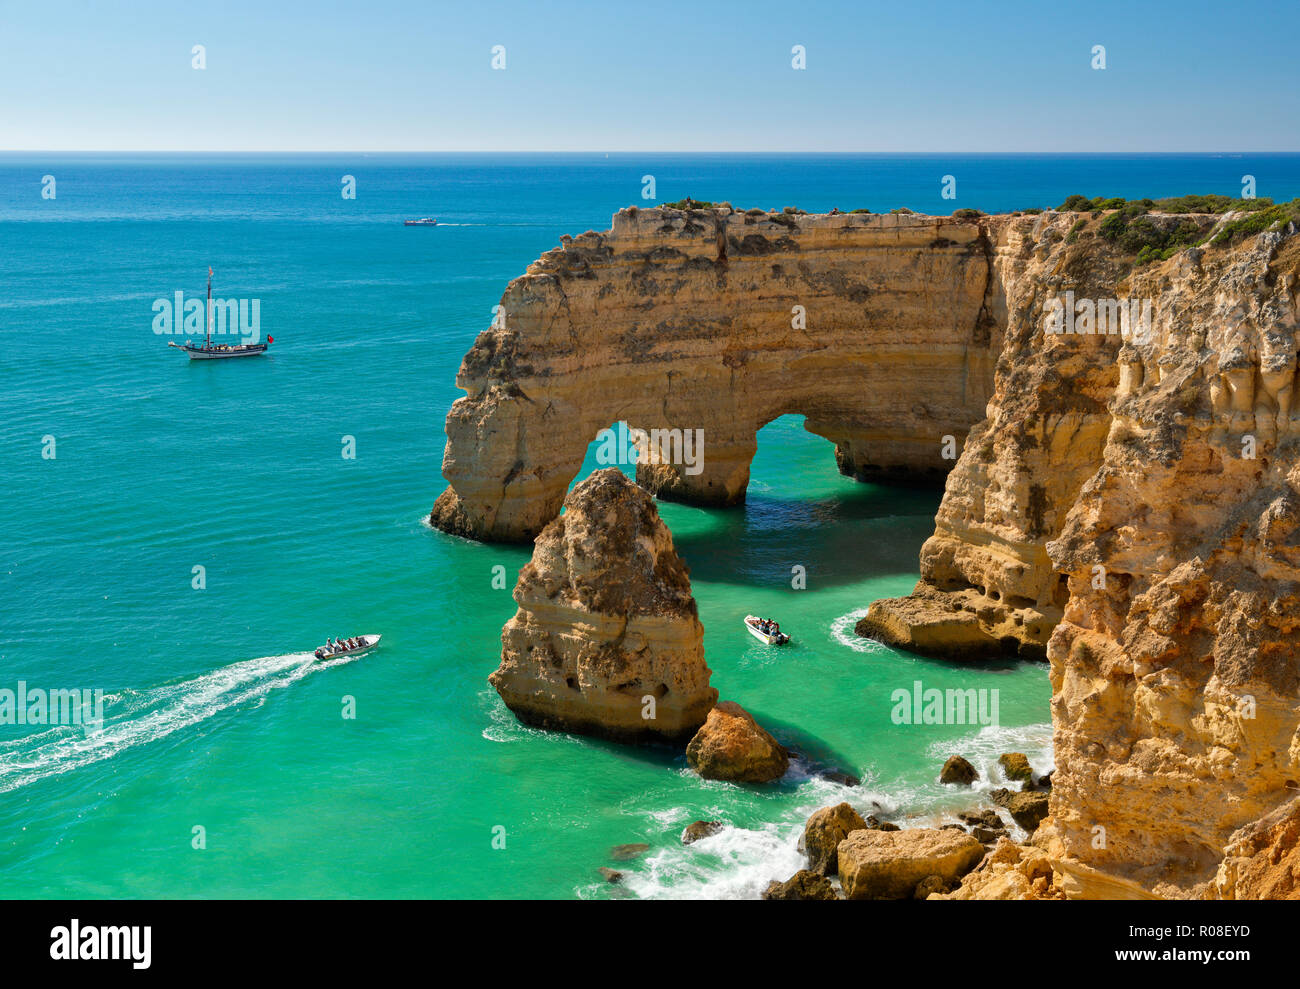 Praia da Marinha rock arches, Armacao de Pera, Algarve, Portugal Banque D'Images